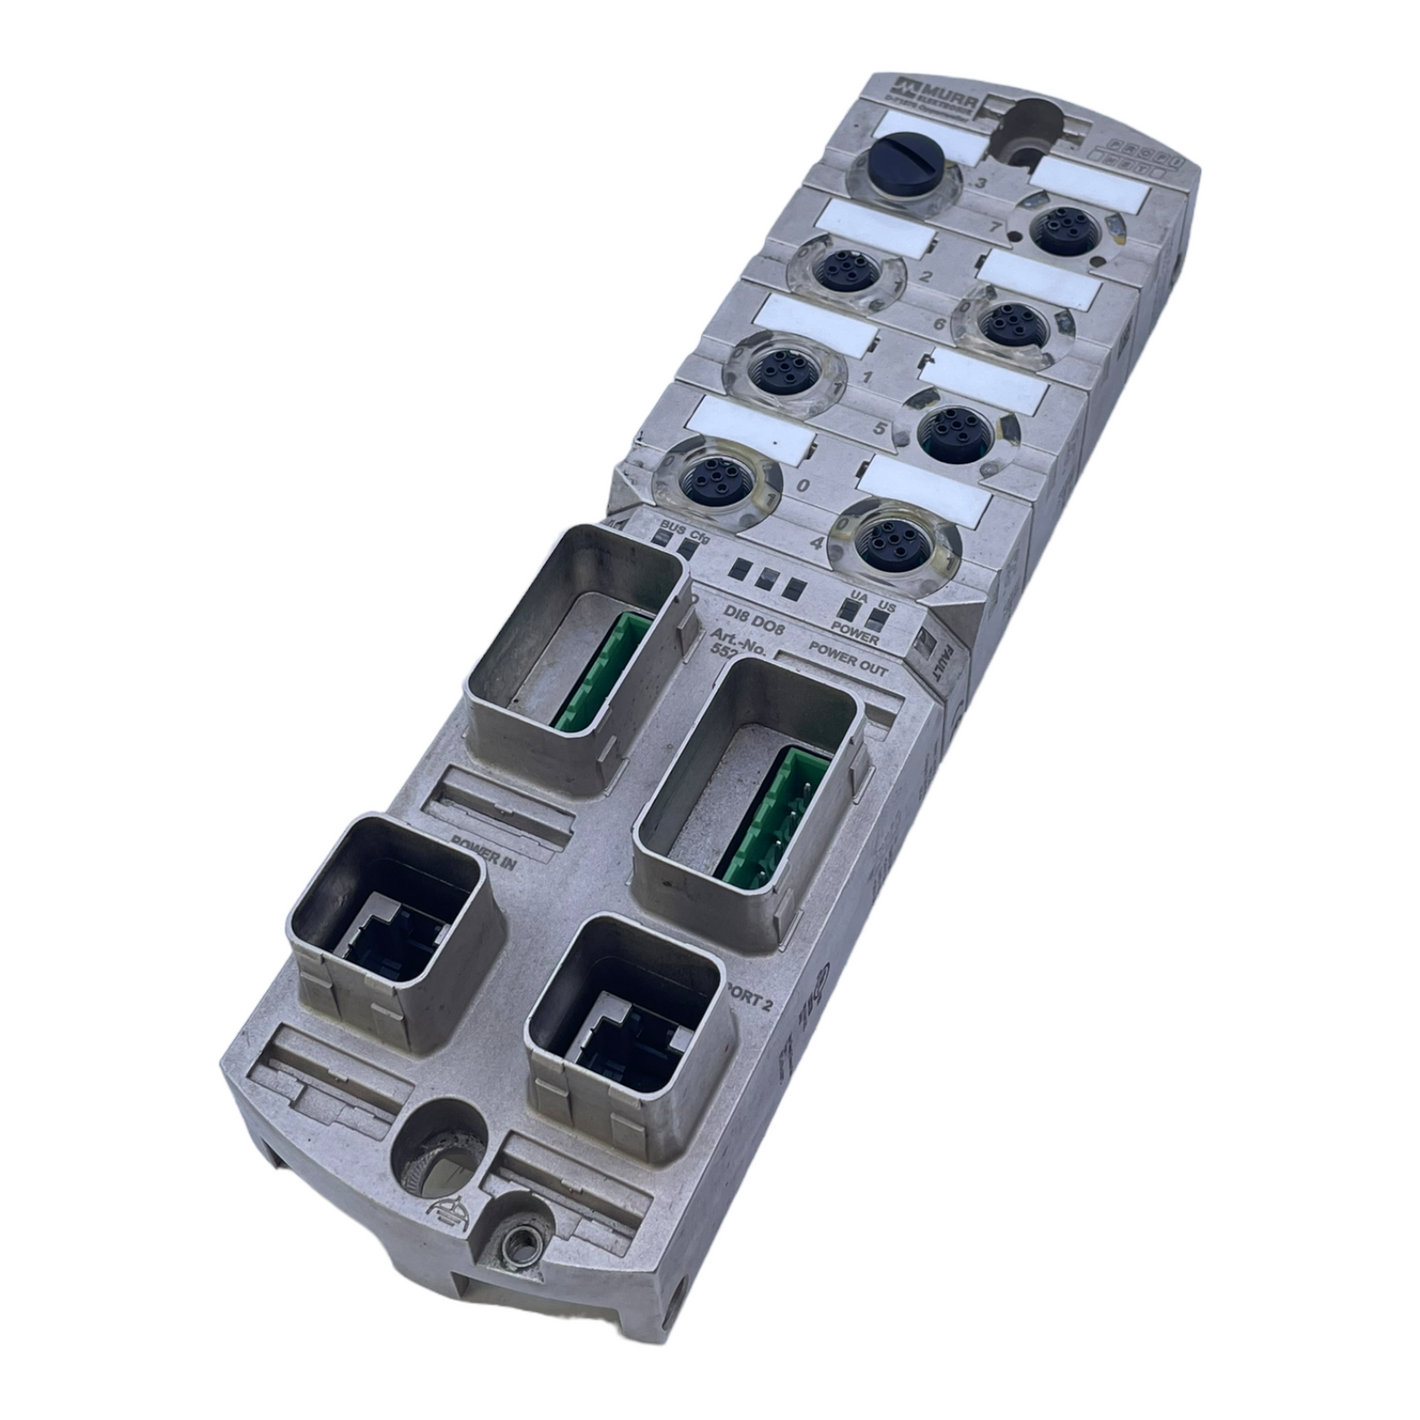 Murr Elektronik MVK+MPNIO DI8 DO8 55269 Compact module for industrial use 